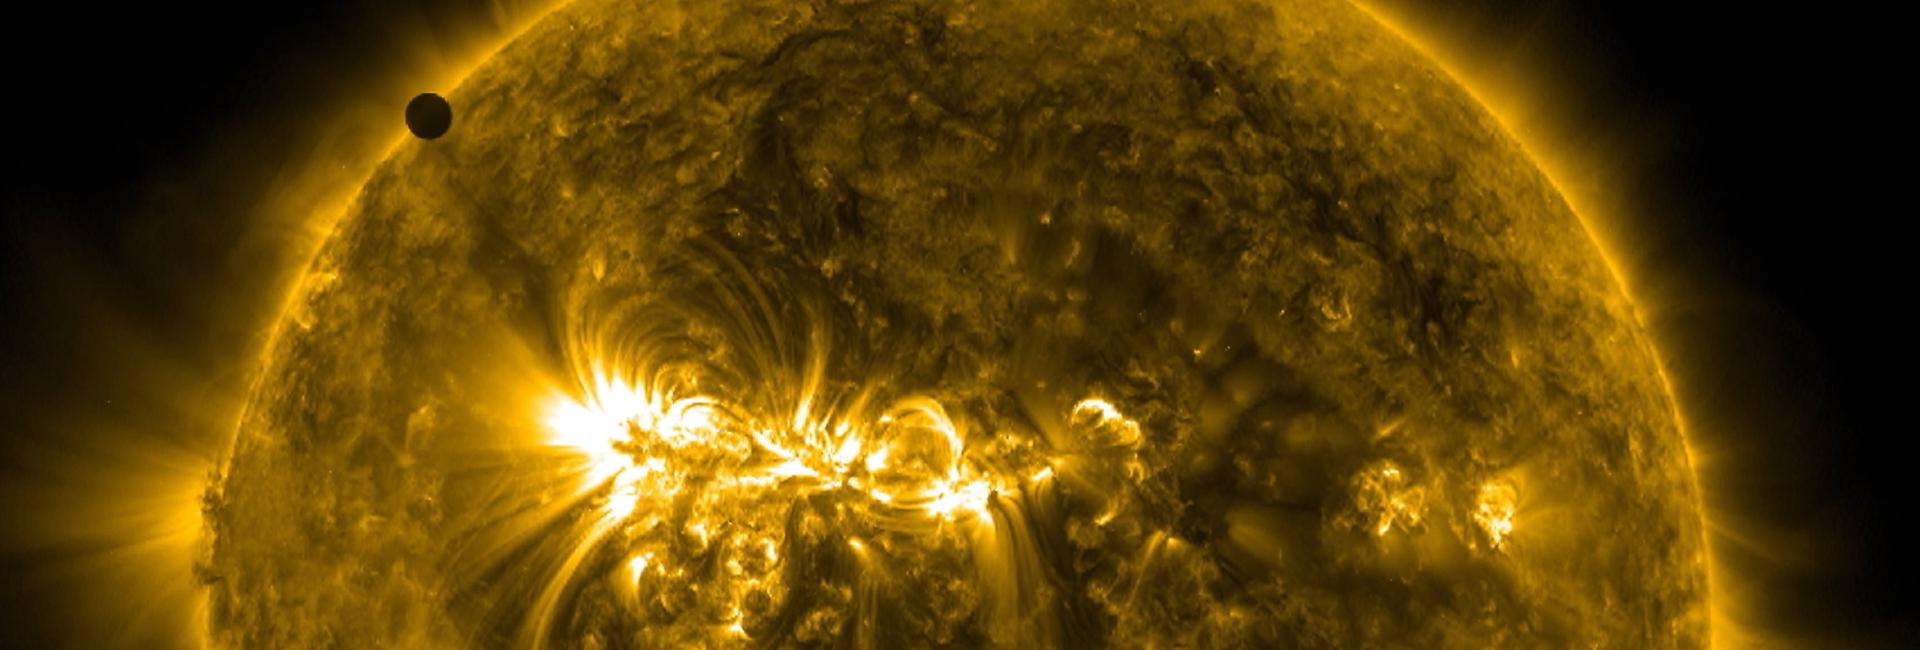 Venus Transiting the Sun